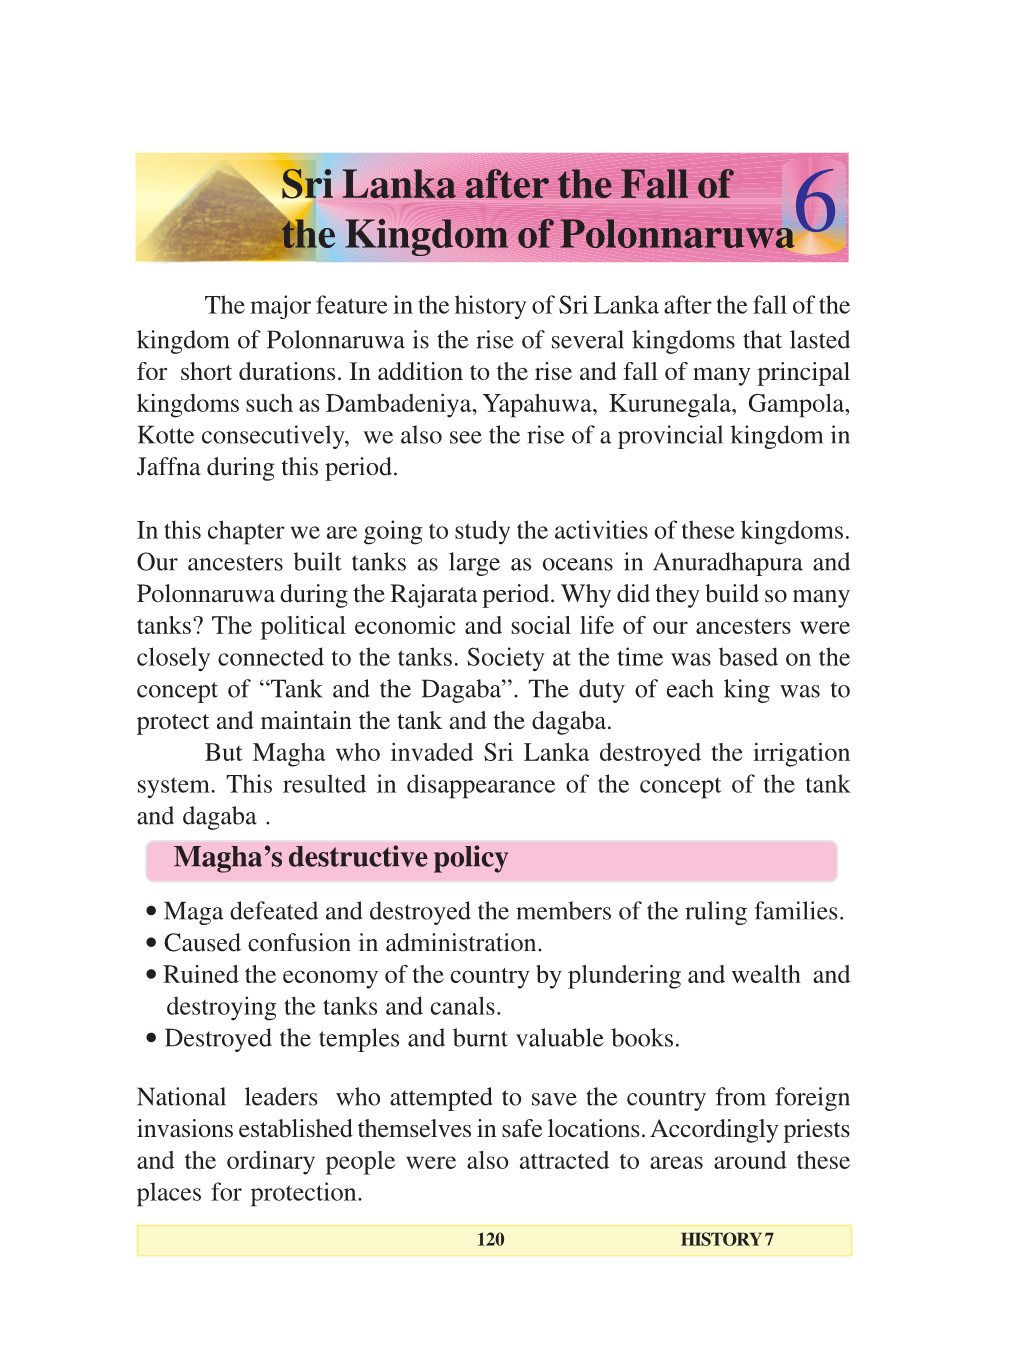 Sri Lanka After the Fall of the Kingdom of Polonnaruwa6